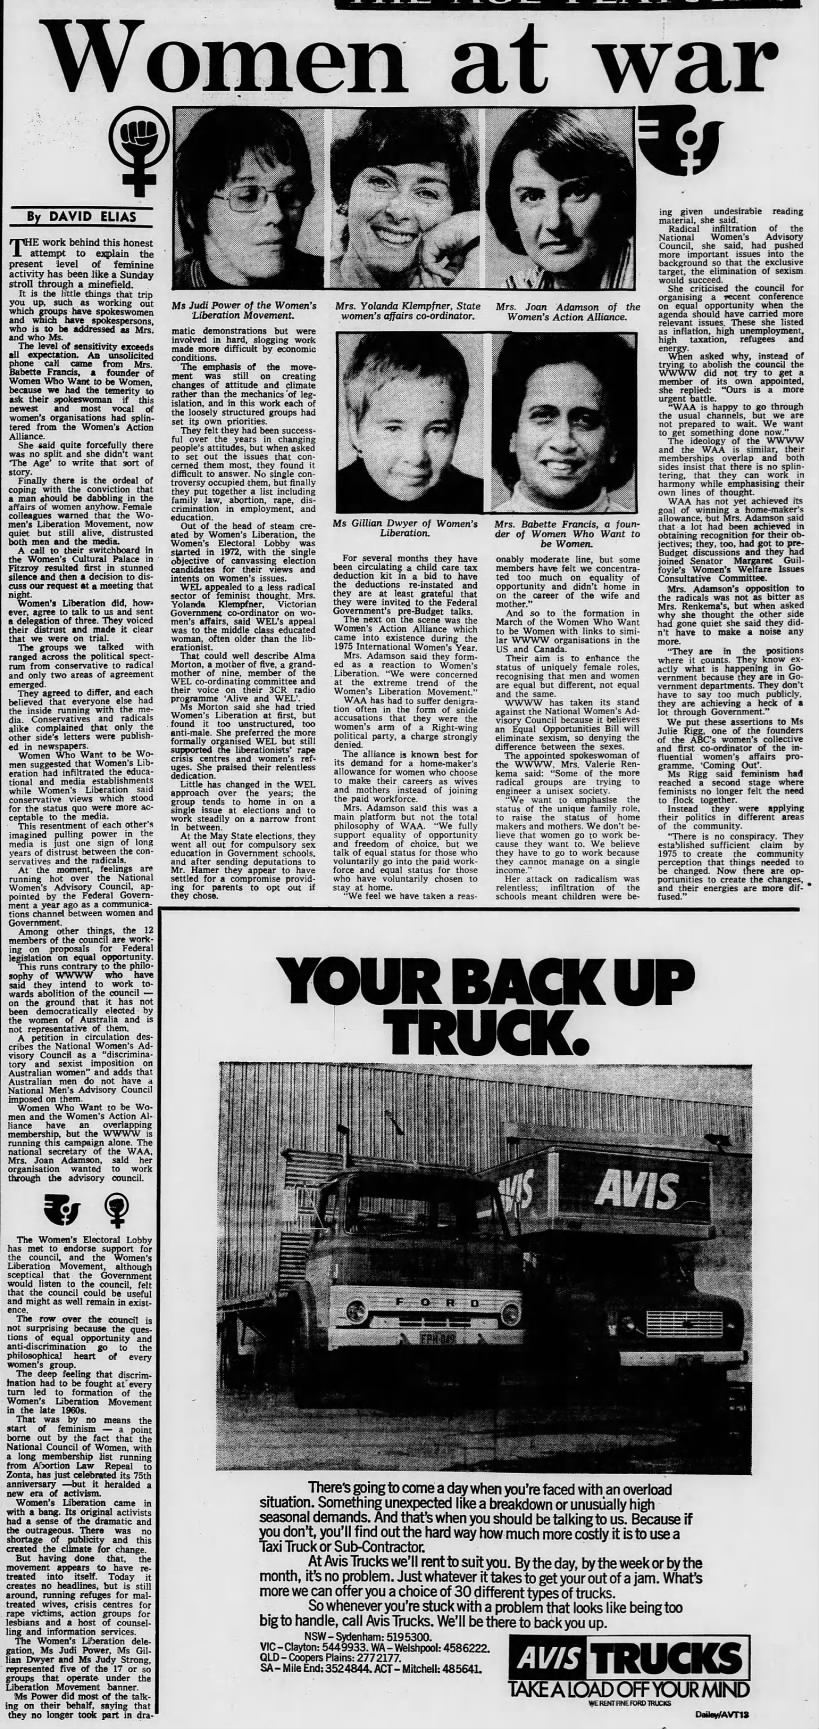 Elias, David. Women at war. The Age (Melbourne, Australia) 30 July 1979, p 9